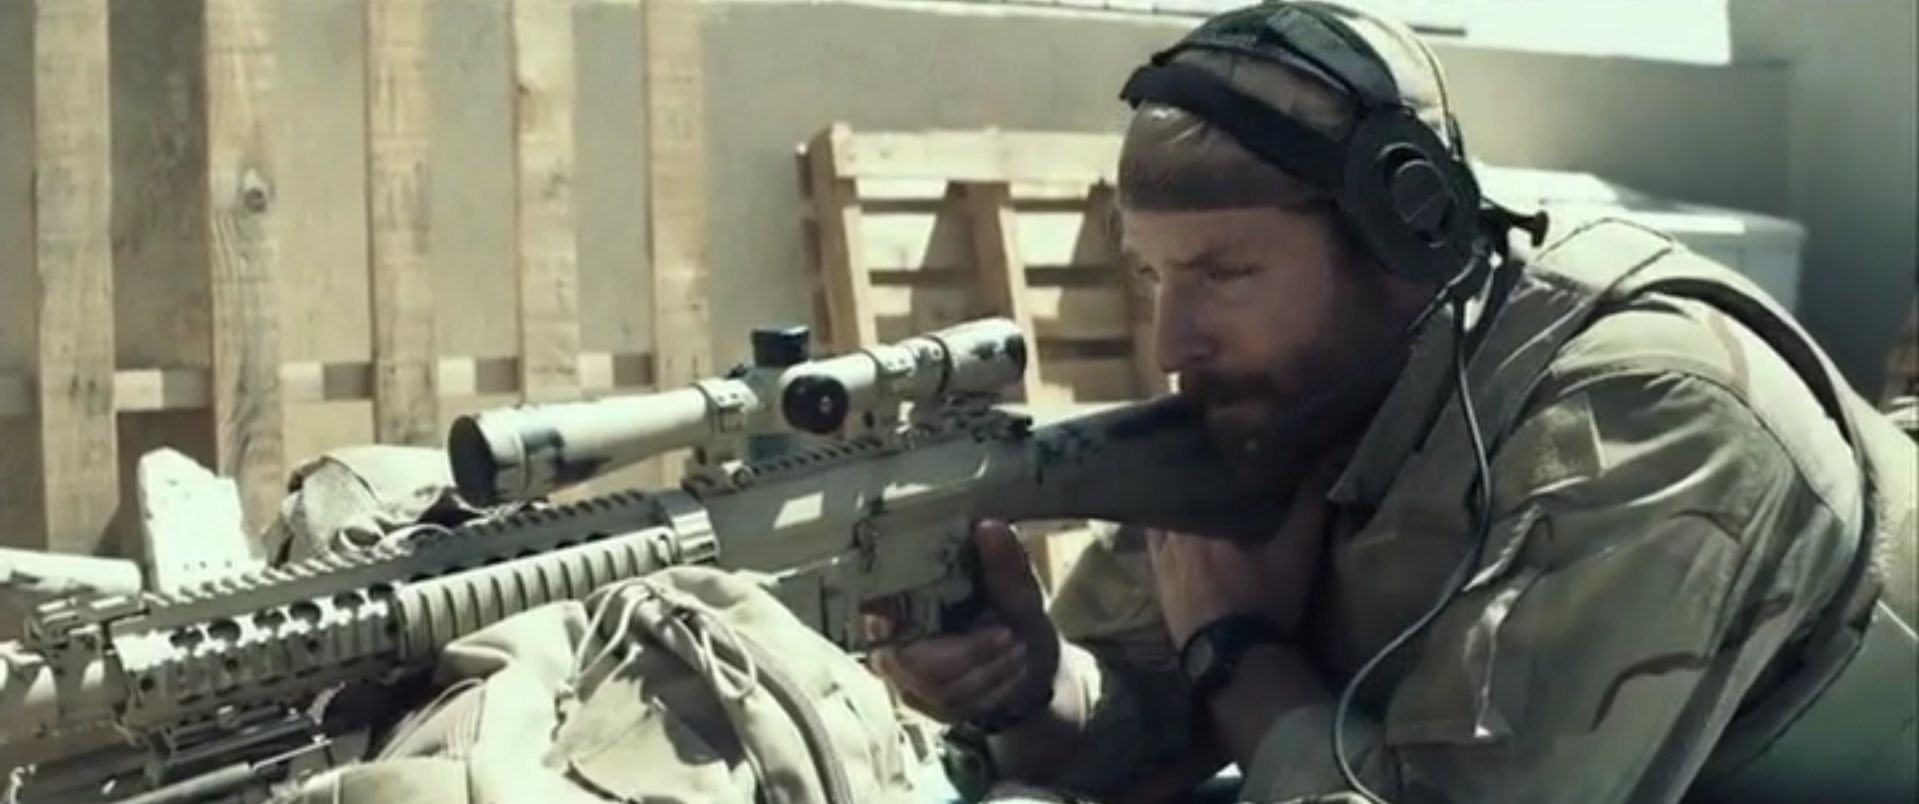  content American Sniper   movie 2015 pic 2 wallpaper view original